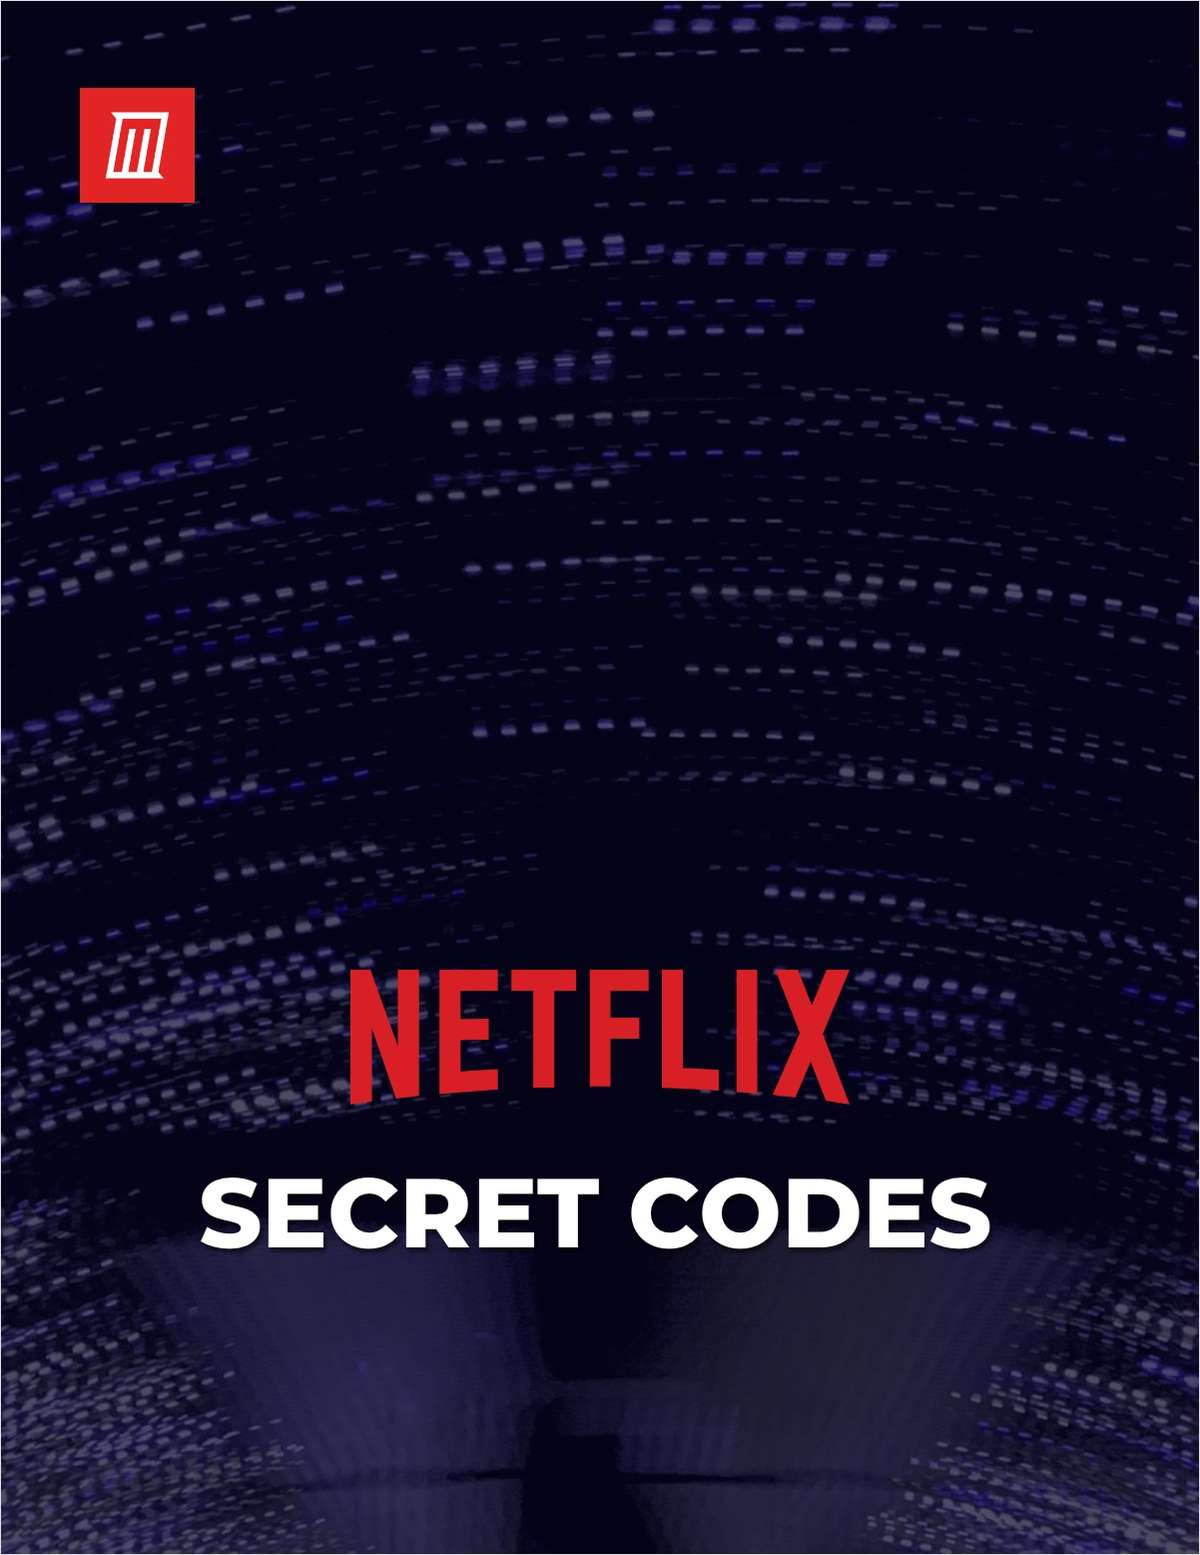 Netflix Secret Codes Free Cheat Sheet